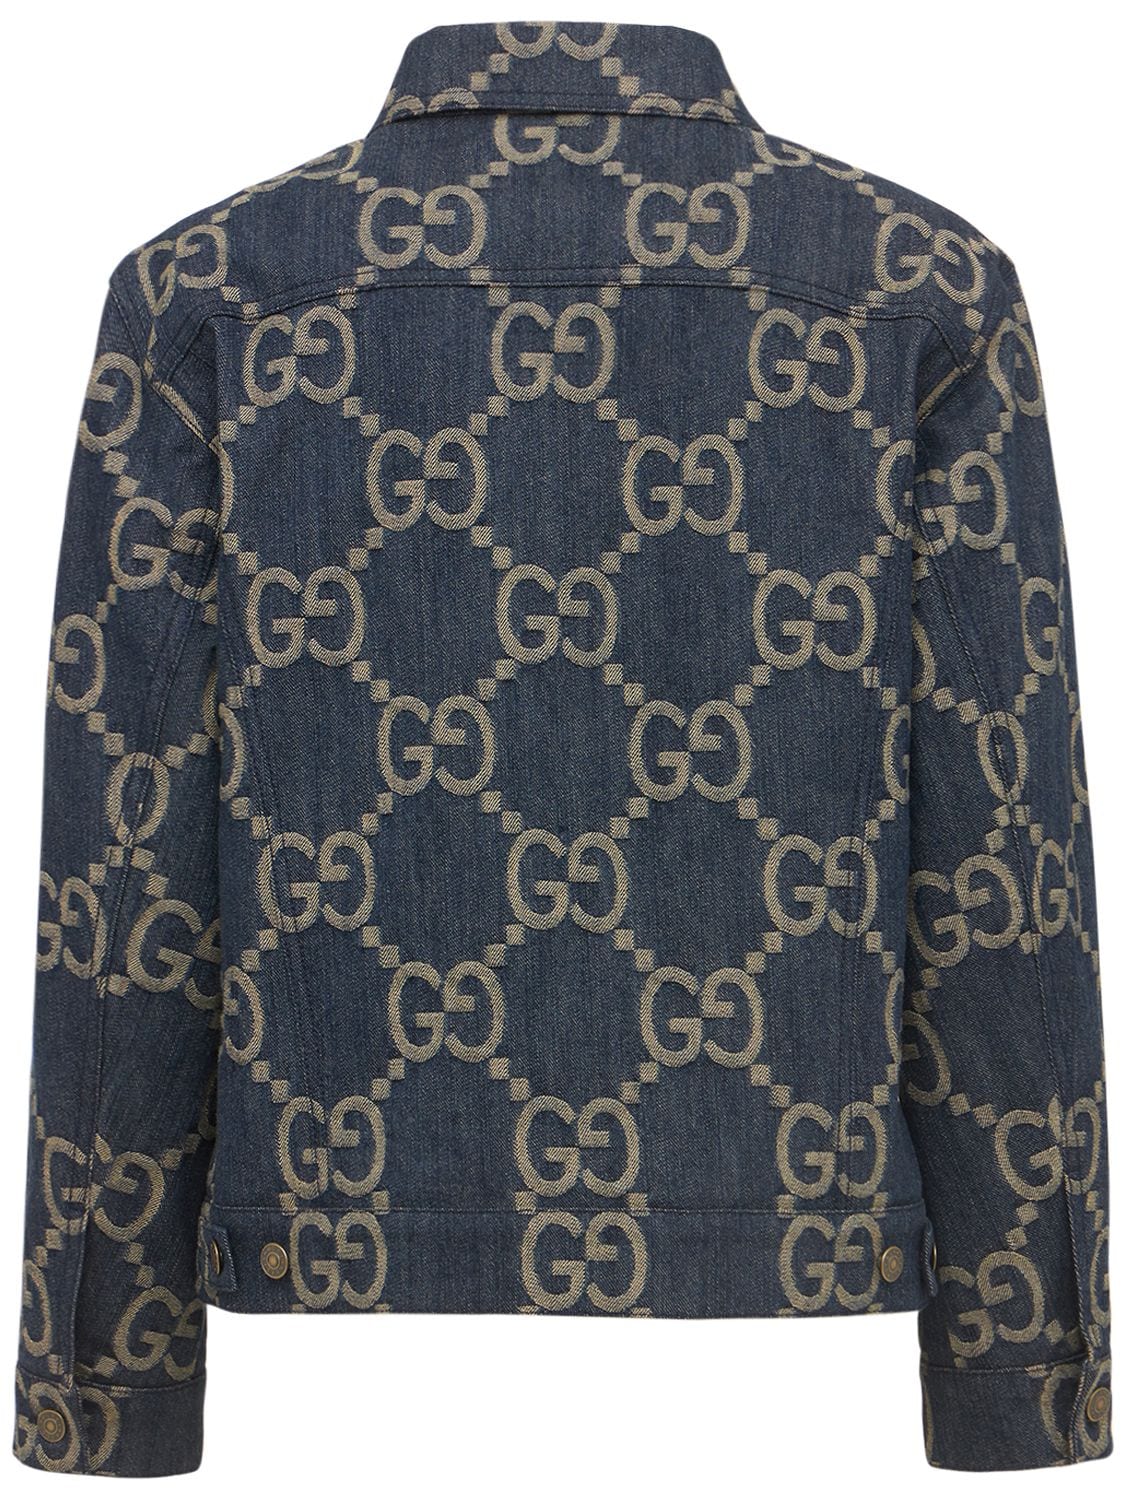 Gucci Gg-jacquard Embroidered Jacket Jacket 8 - Denim